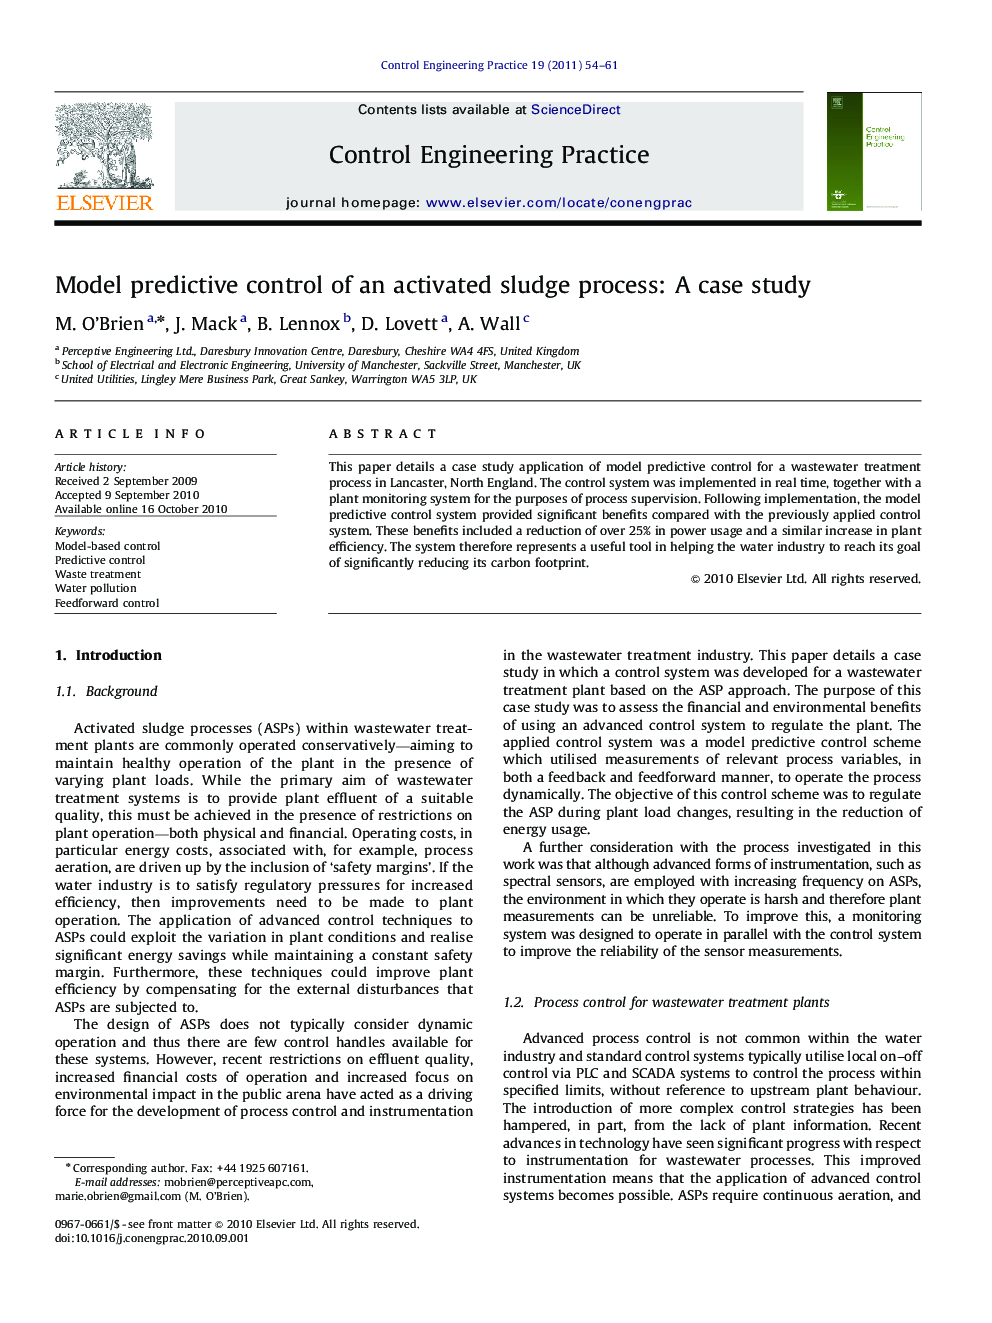 Model predictive control of an activated sludge process: A case study